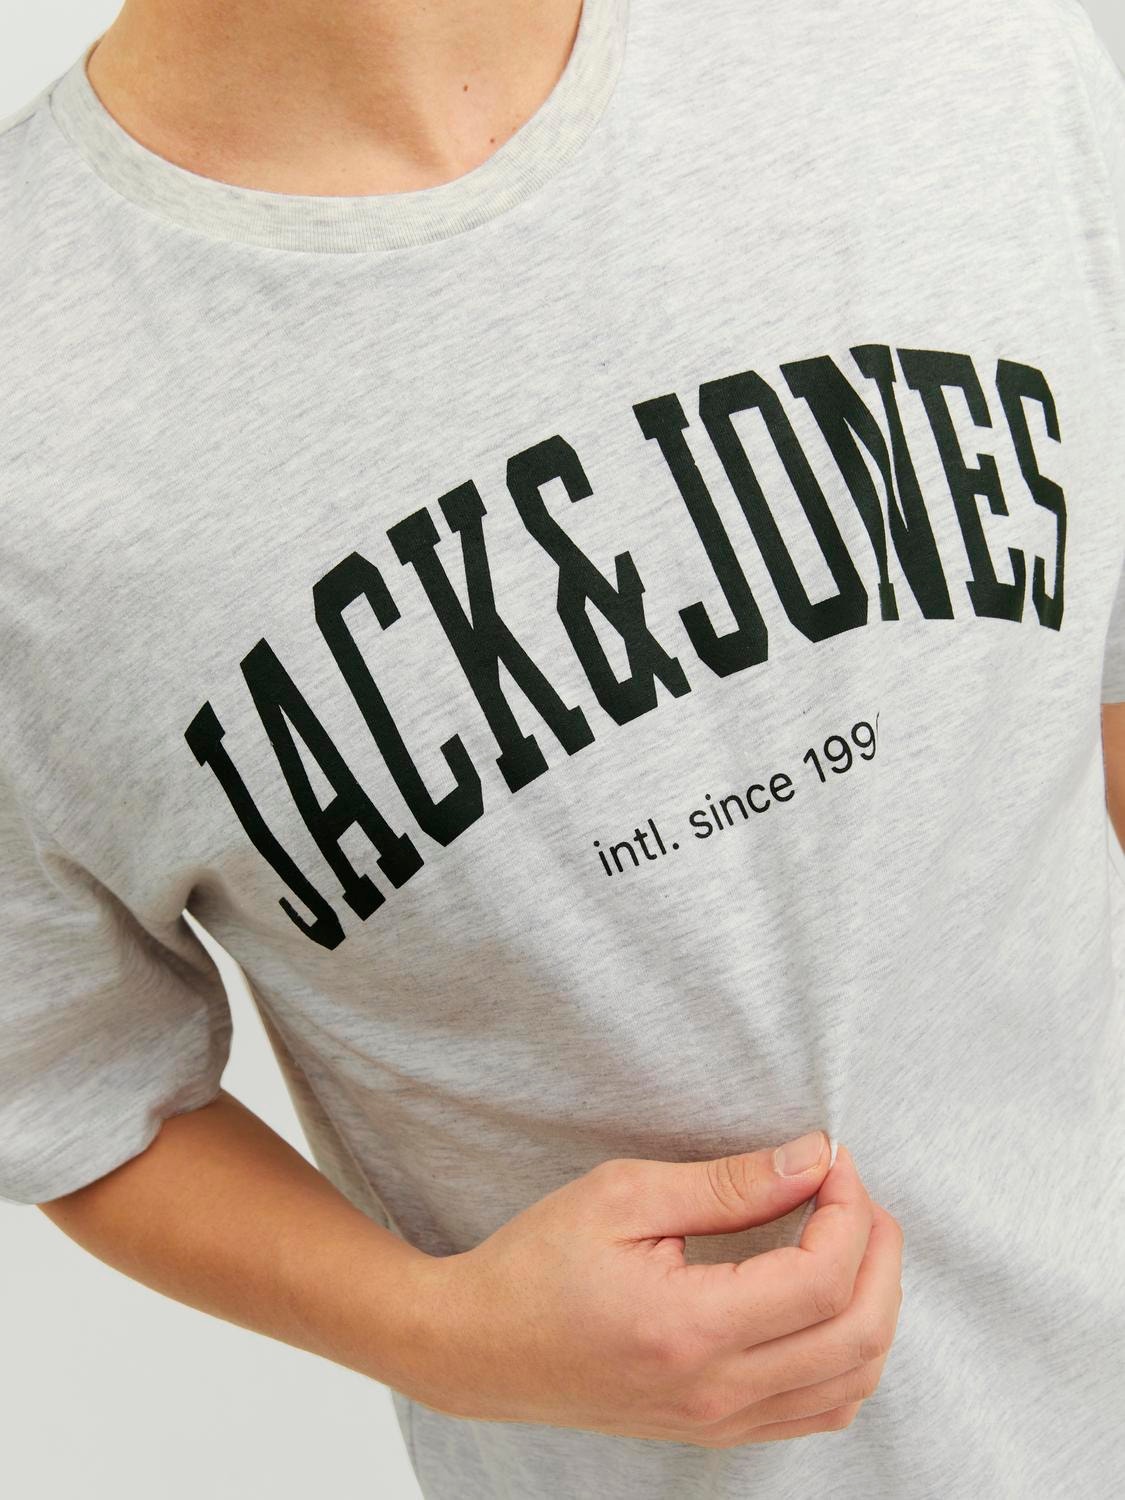 Jack & Jones Camiseta Logotipo Cuello redondo -White Melange - 12236514